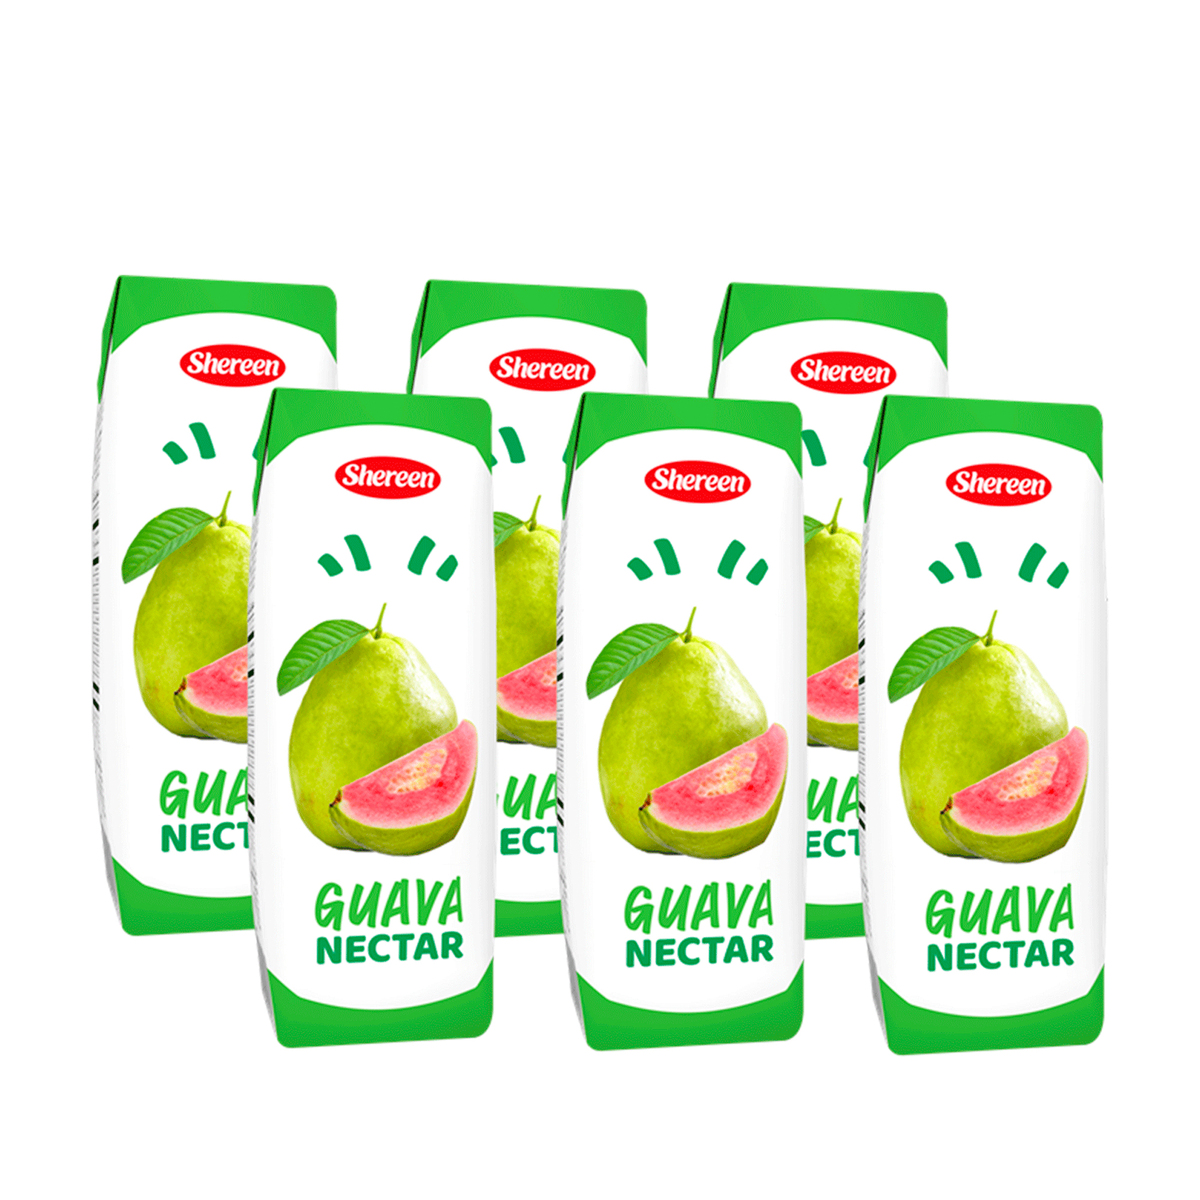 Shereen Guava Nectar Juice Tetra Pack 250 ml